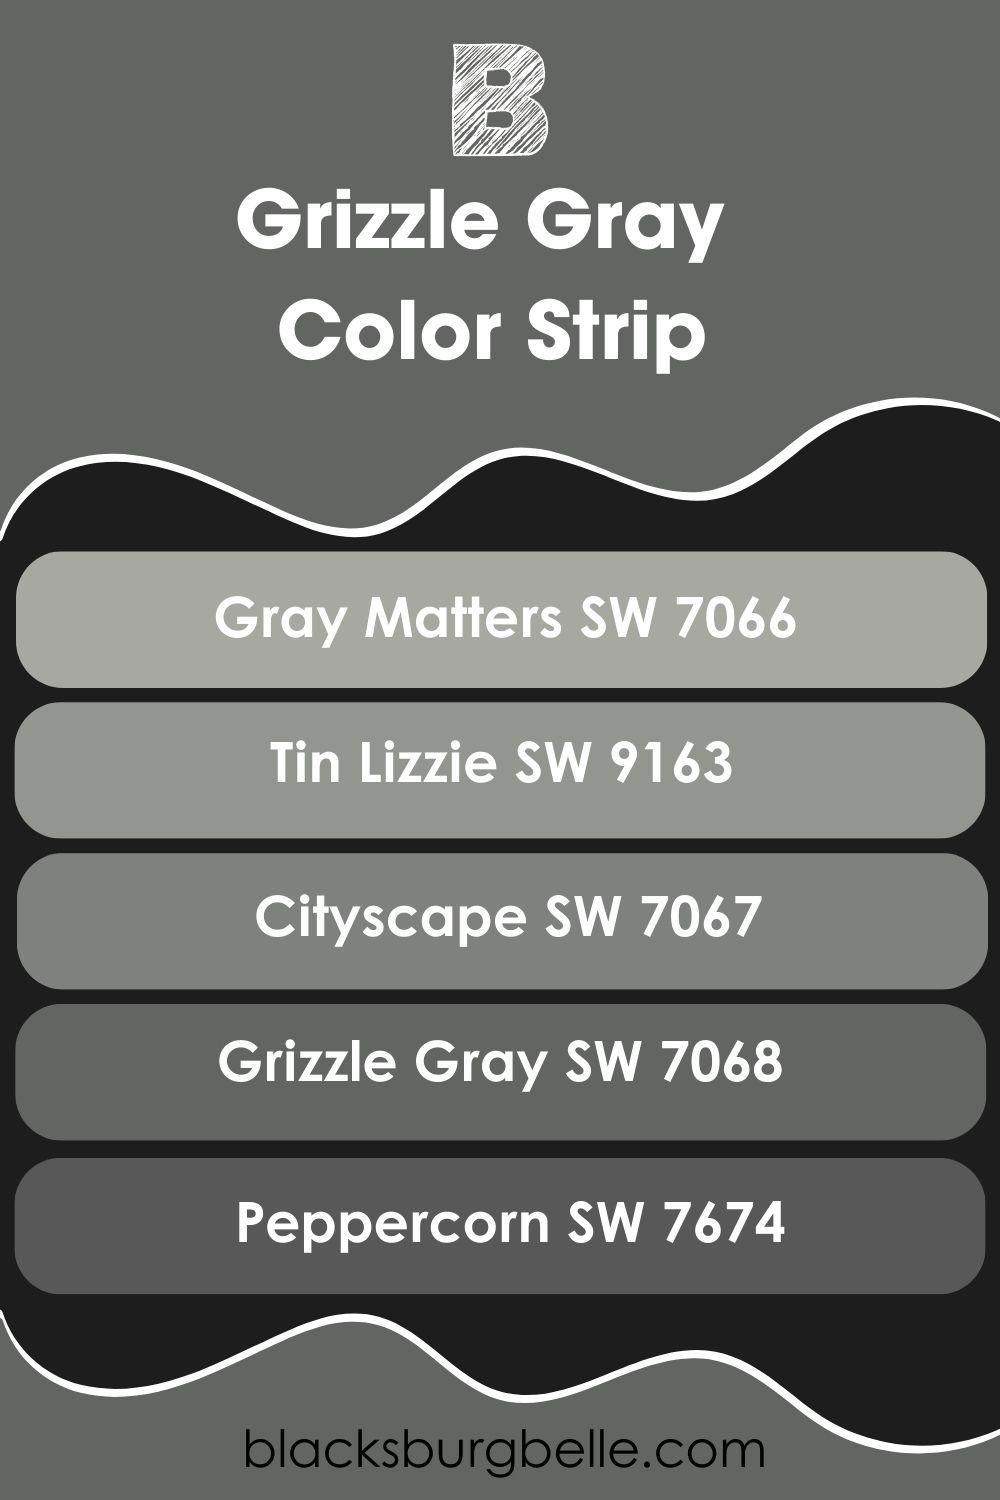 Grizzle Gray Color Strip